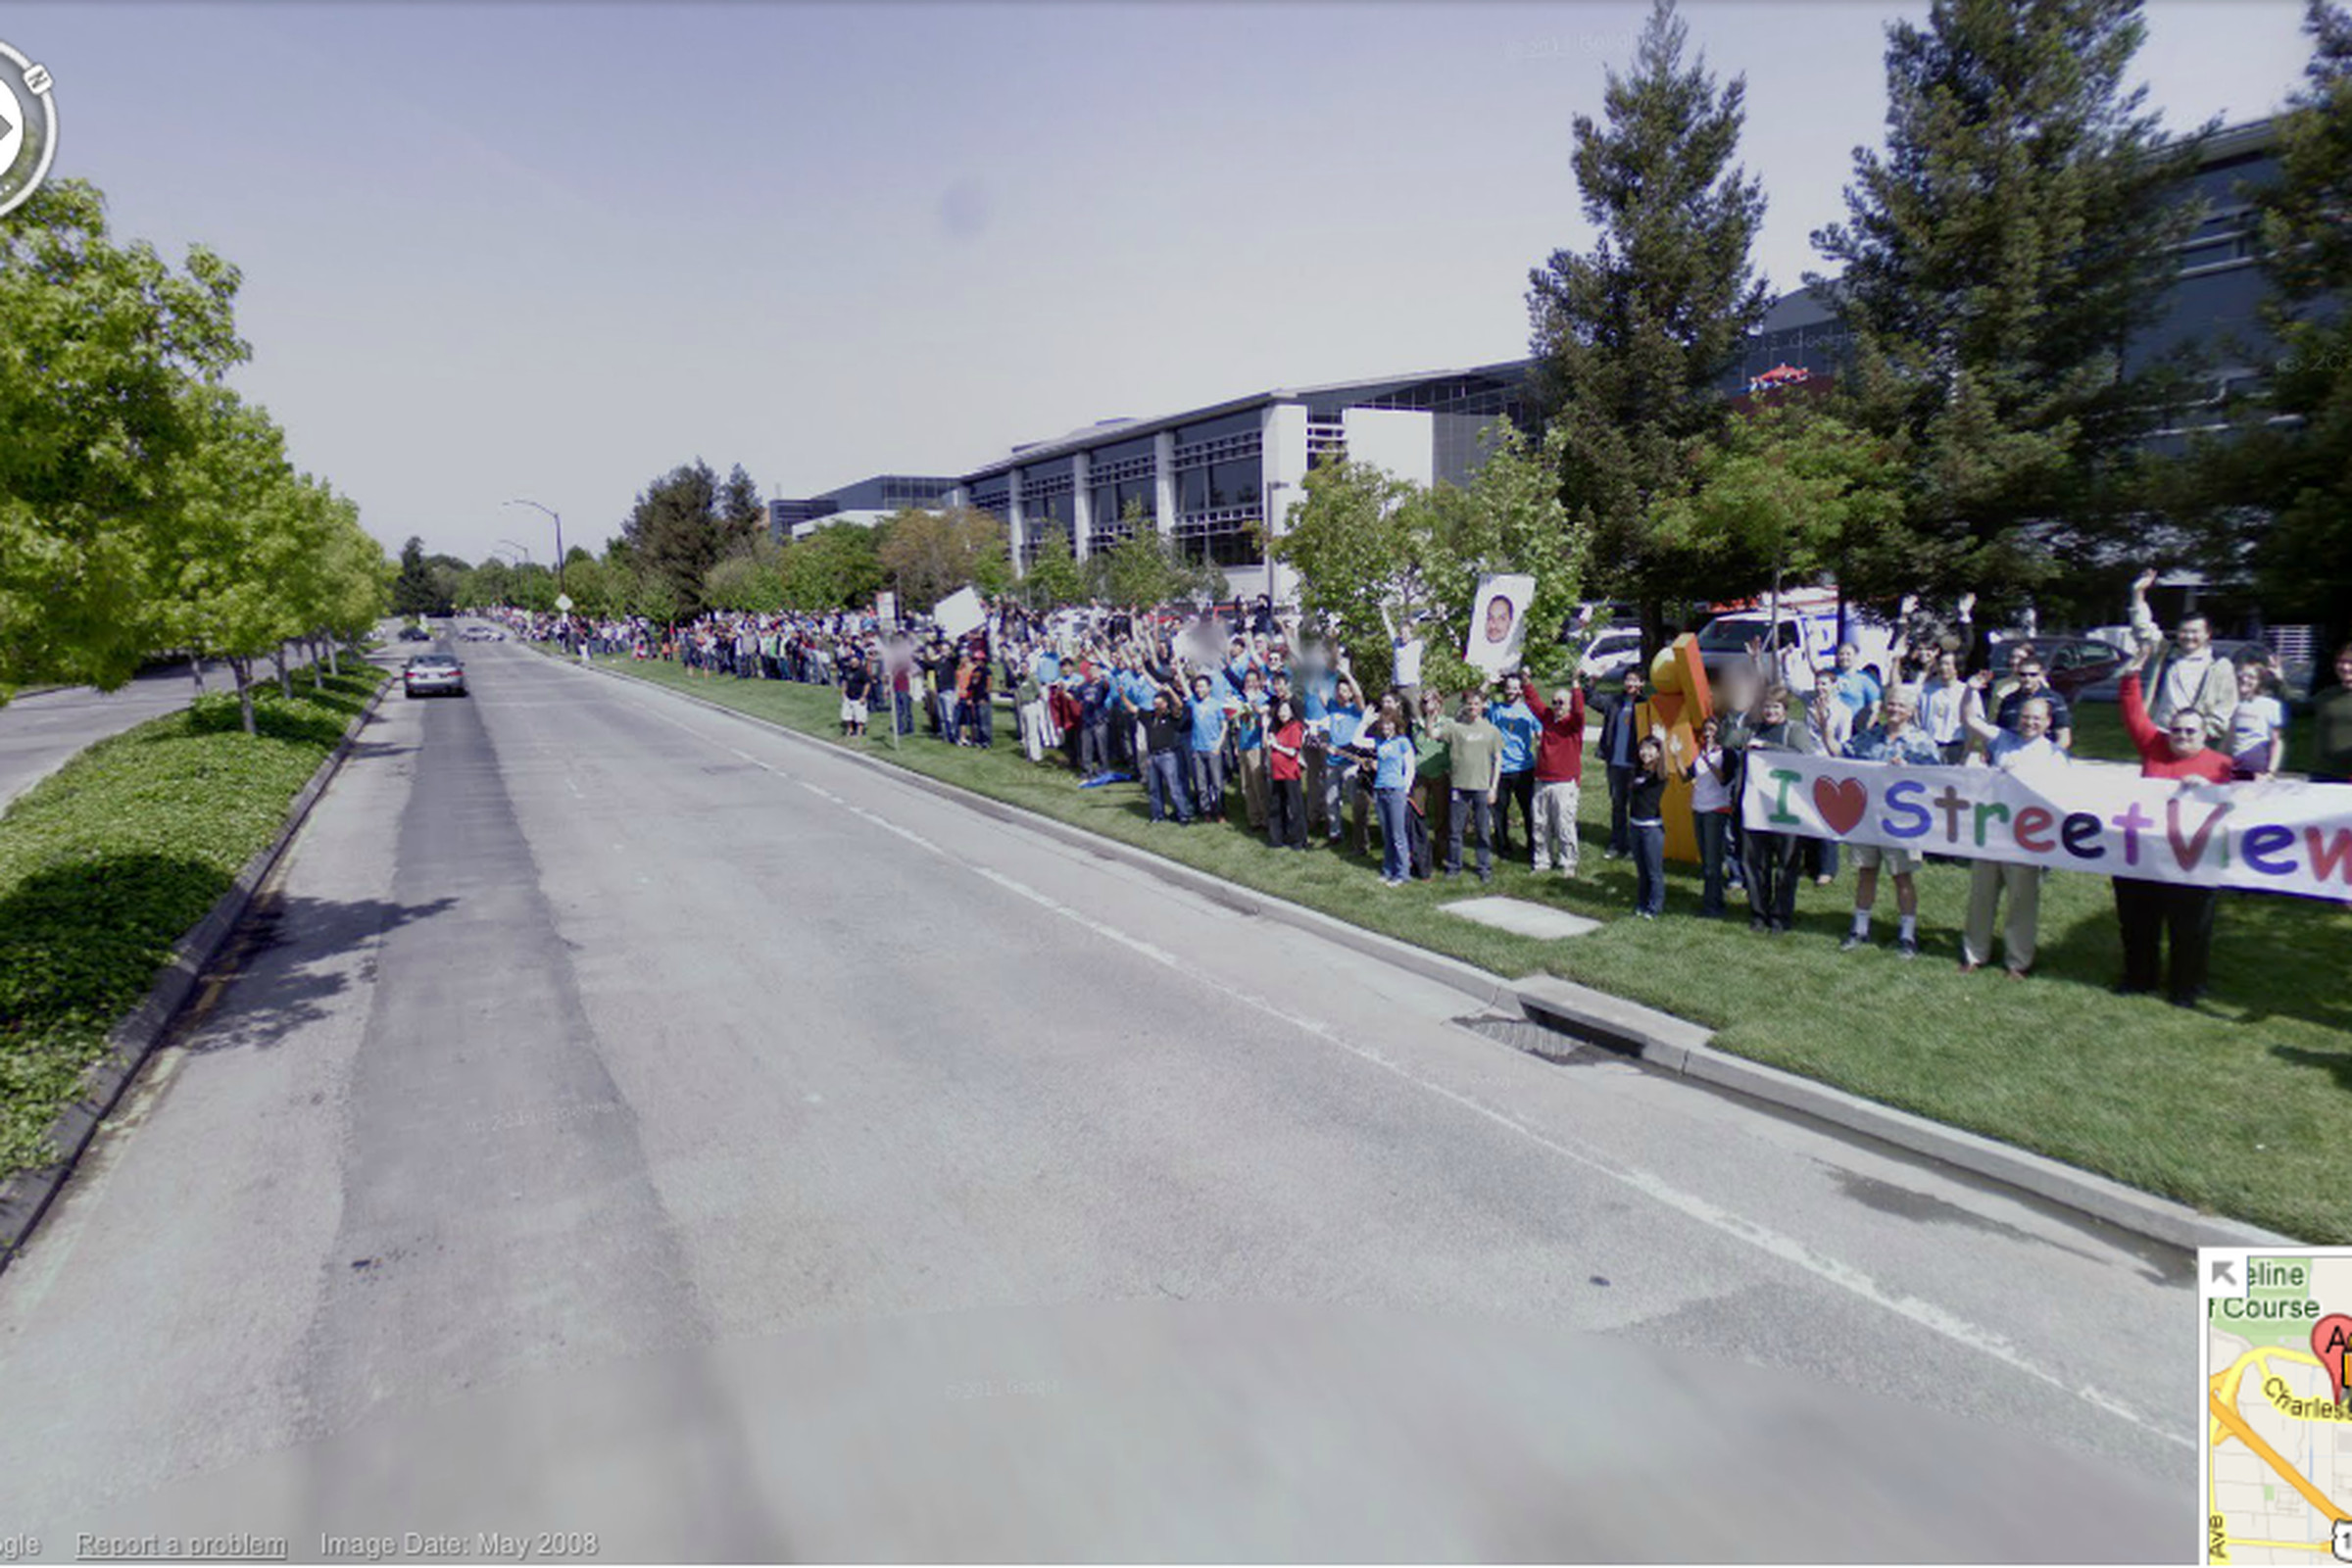 Google HQ street view